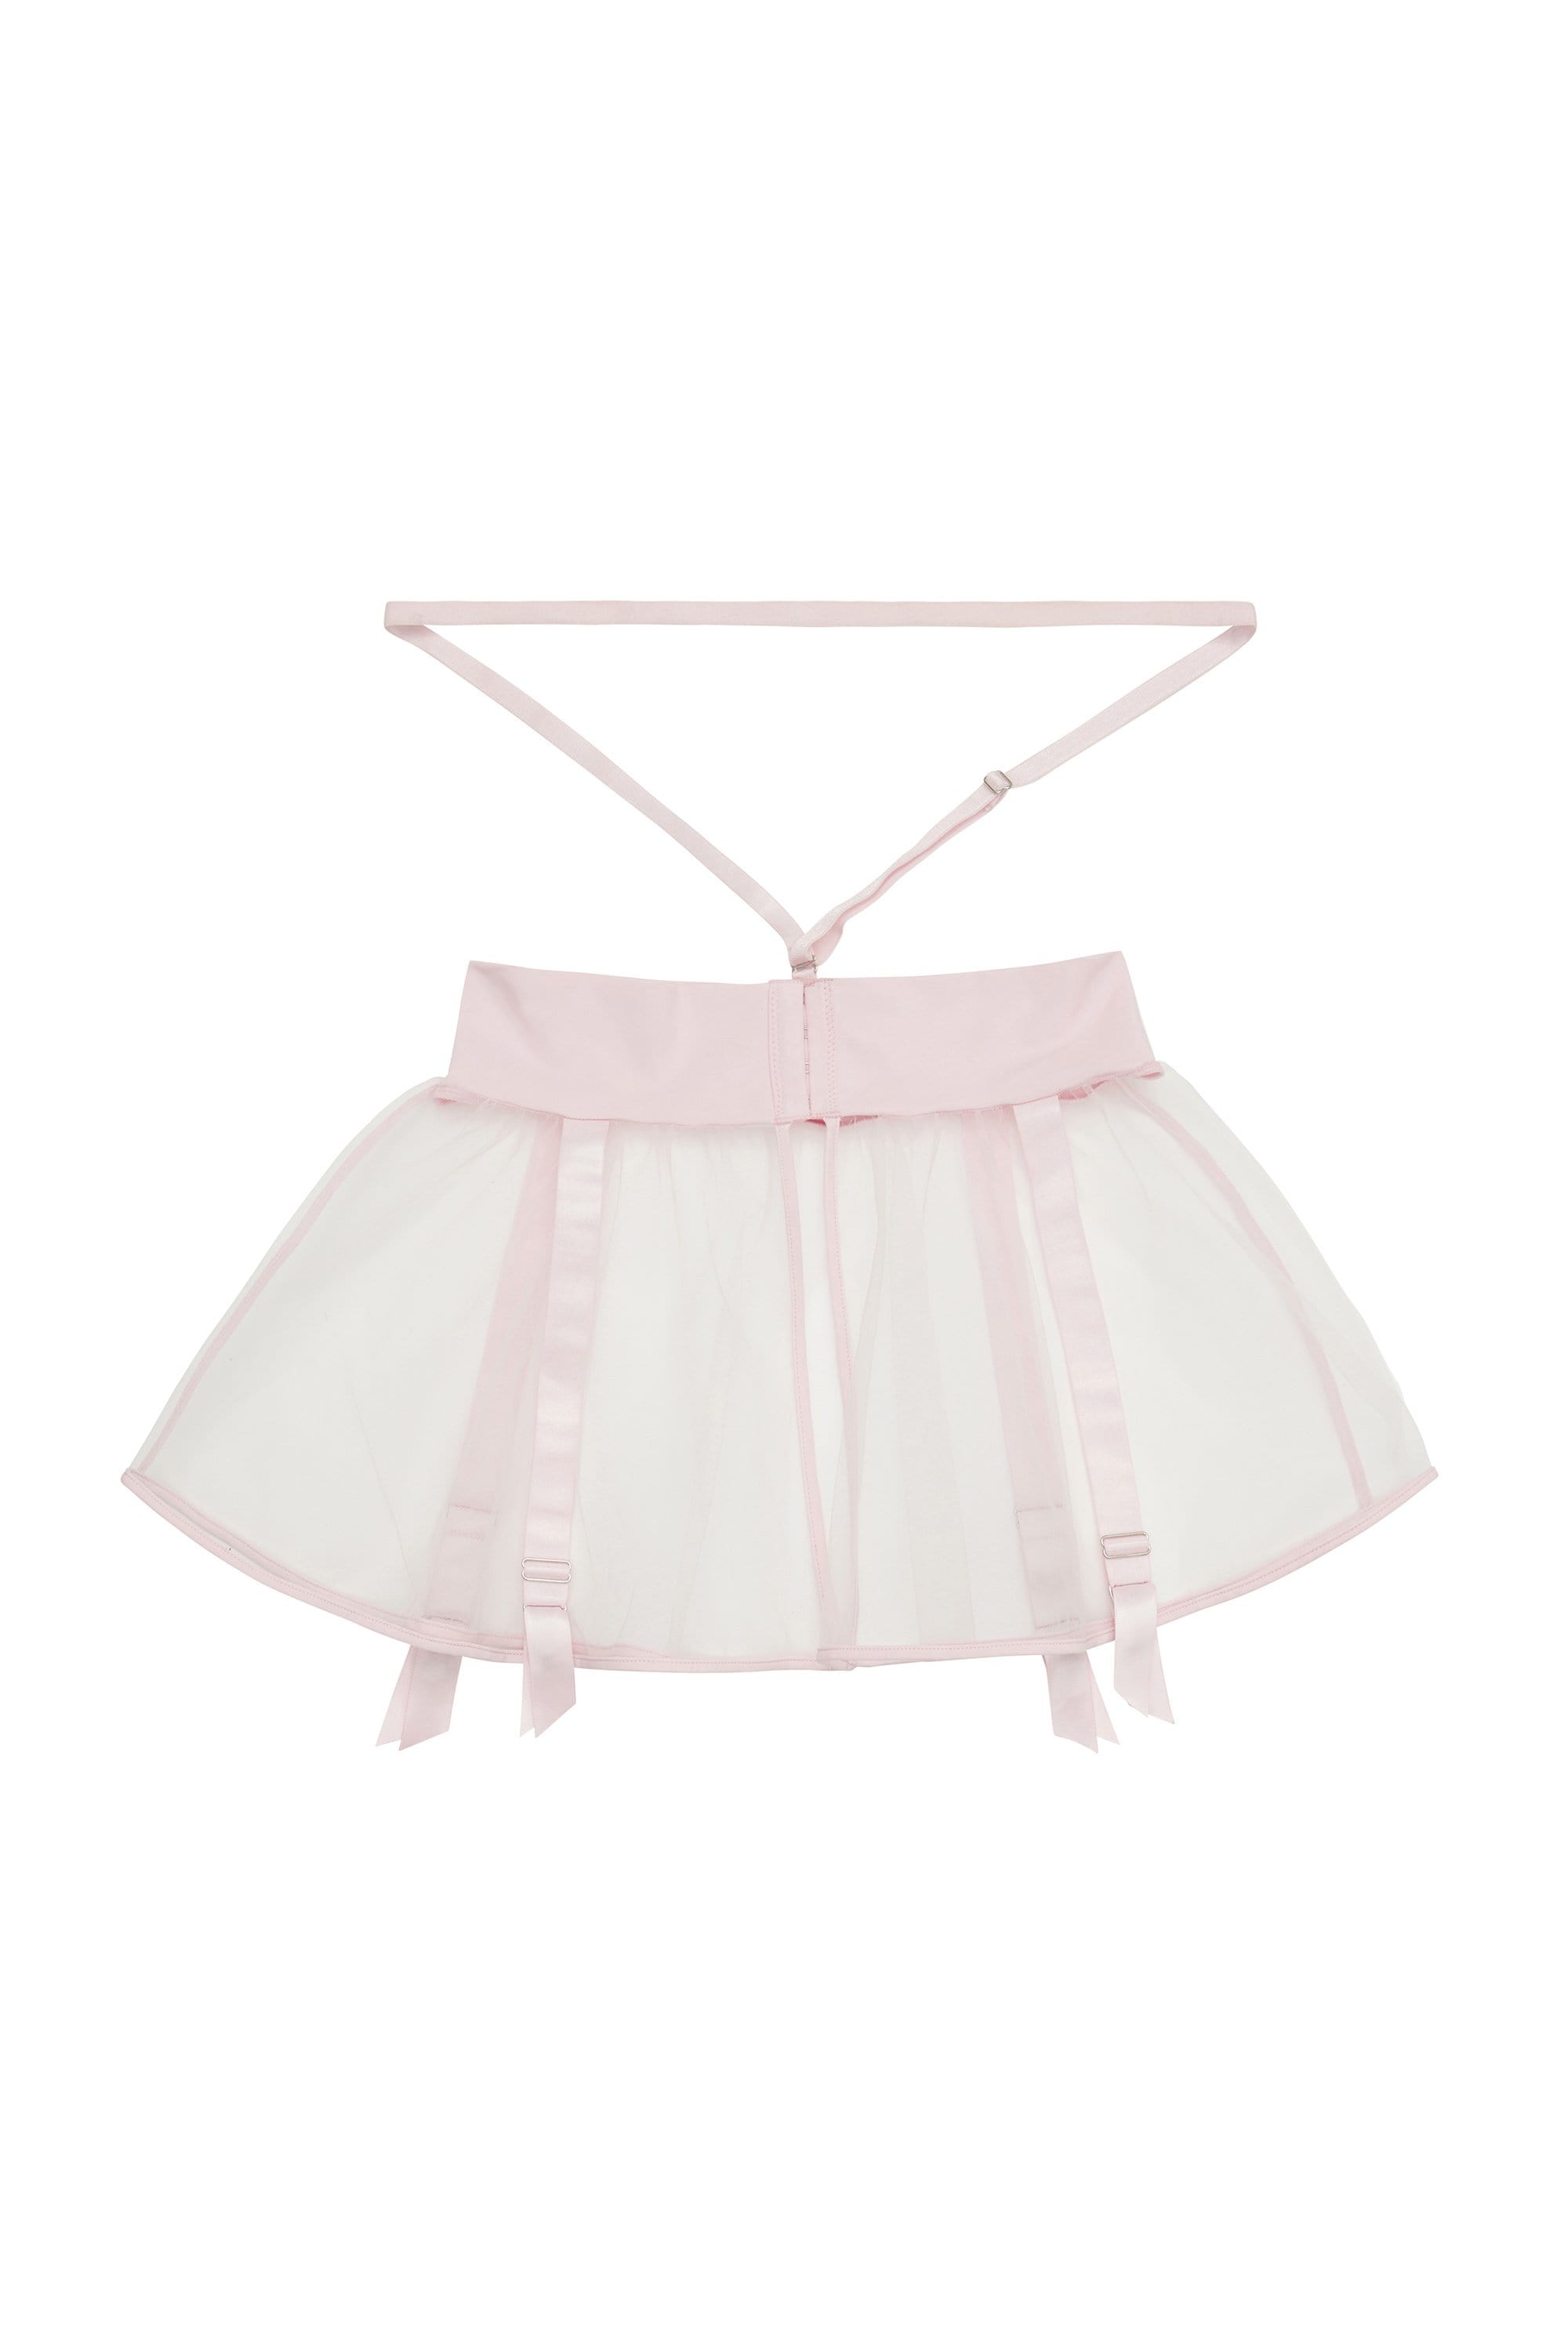 Peek & Beau Caia Pink Suspender Harness Skirt